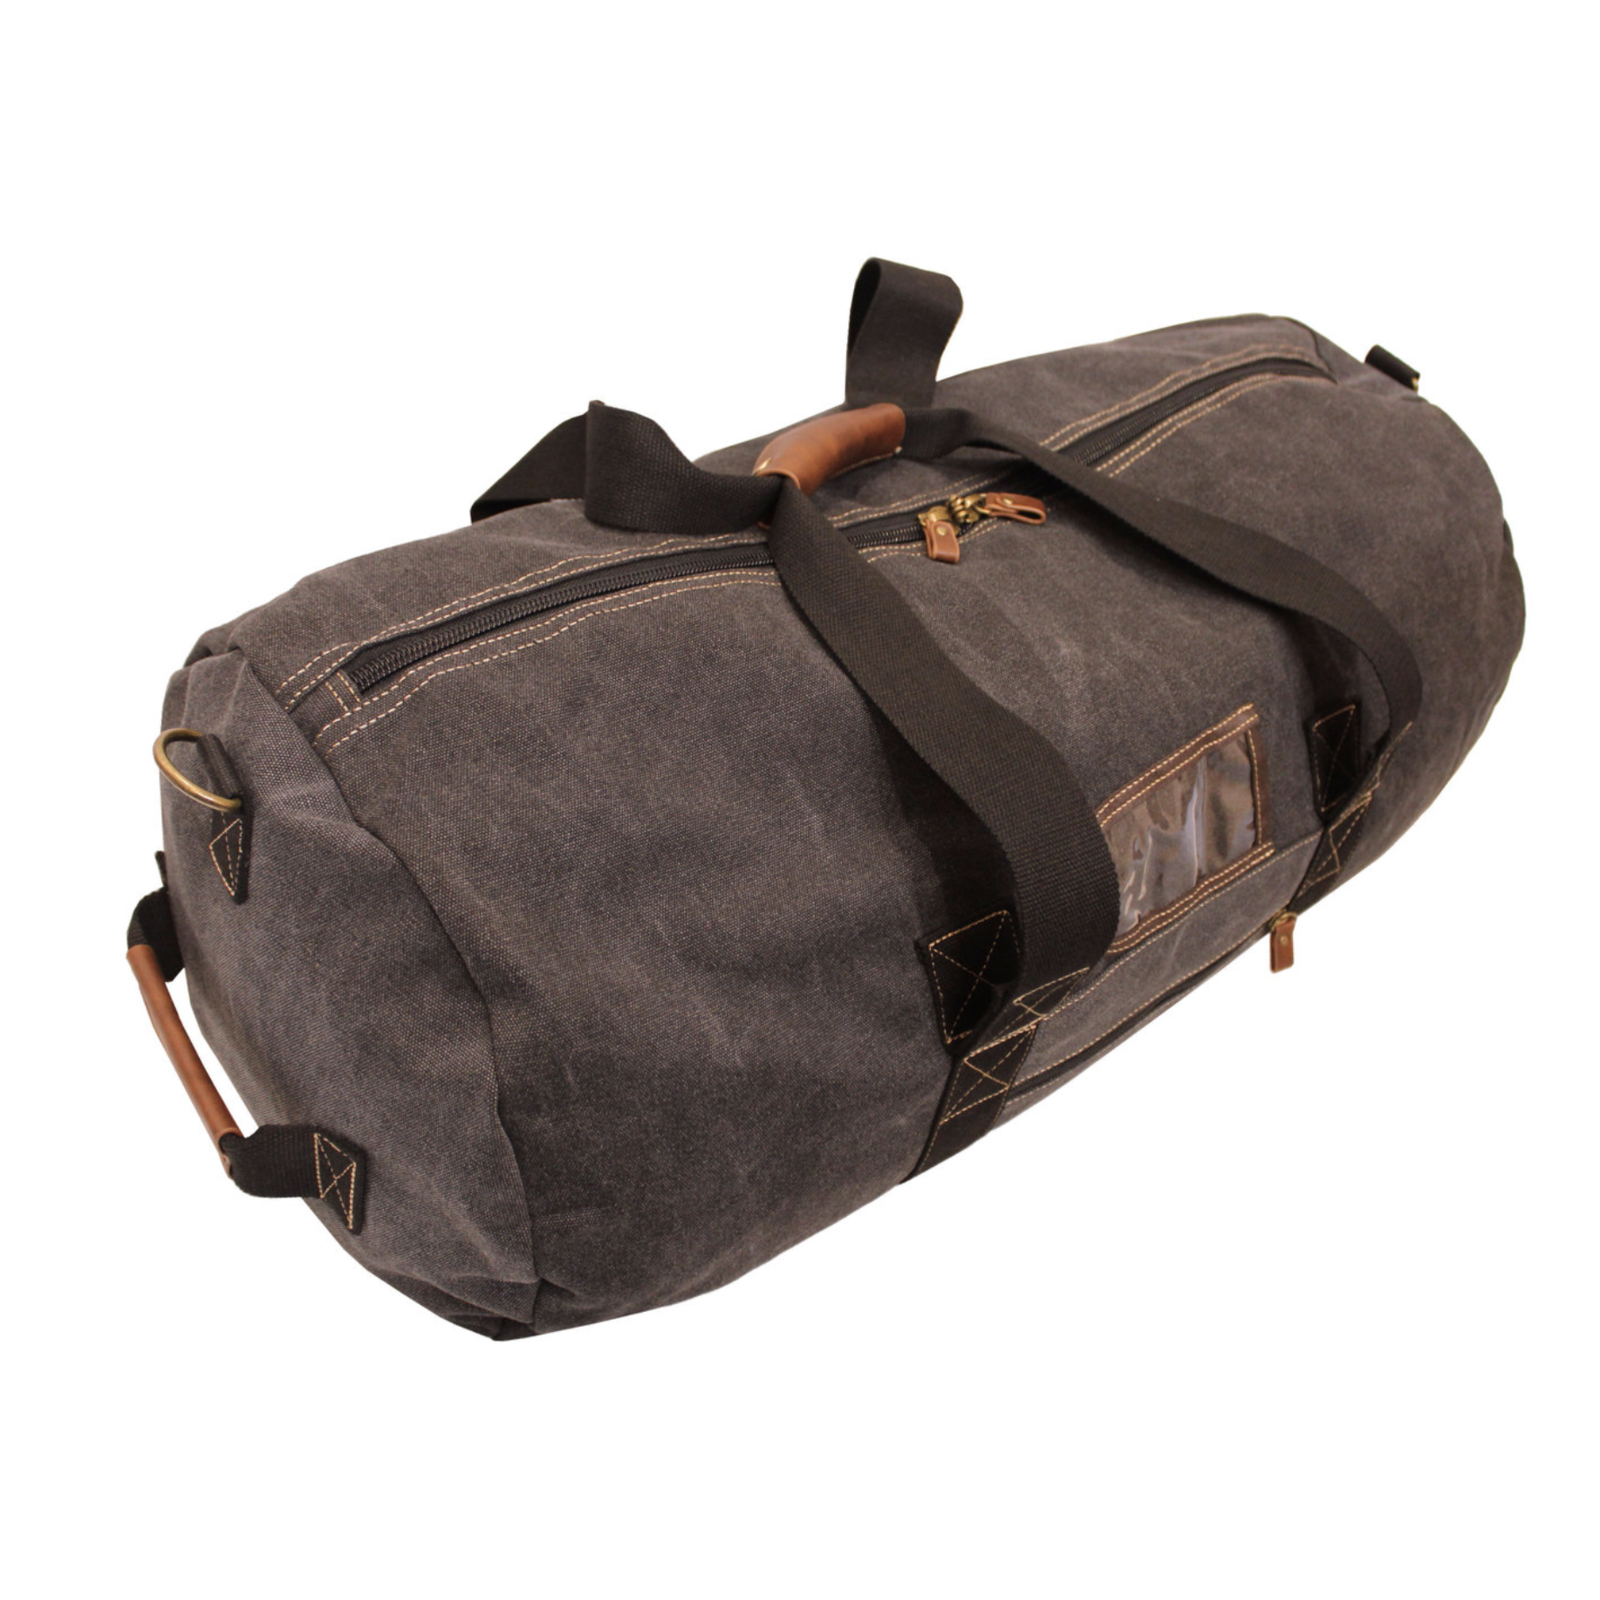 FIB 70cm Canvas Duffle Bag Travel Heavy Duty Large - Black | eBay